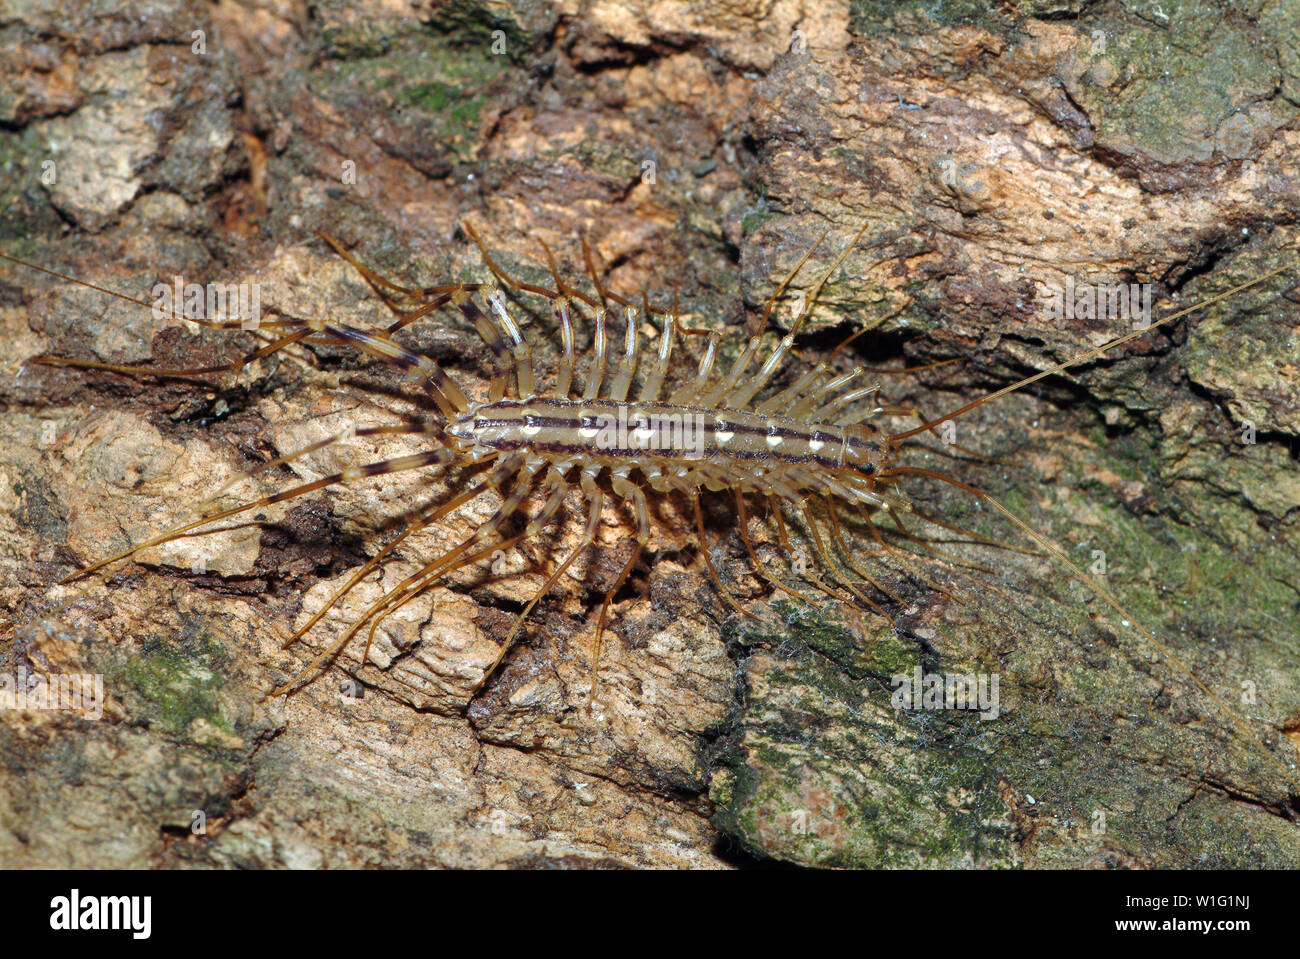 house centipede, Scutigera coleoptrata, Spinnenläufer Stock Photo